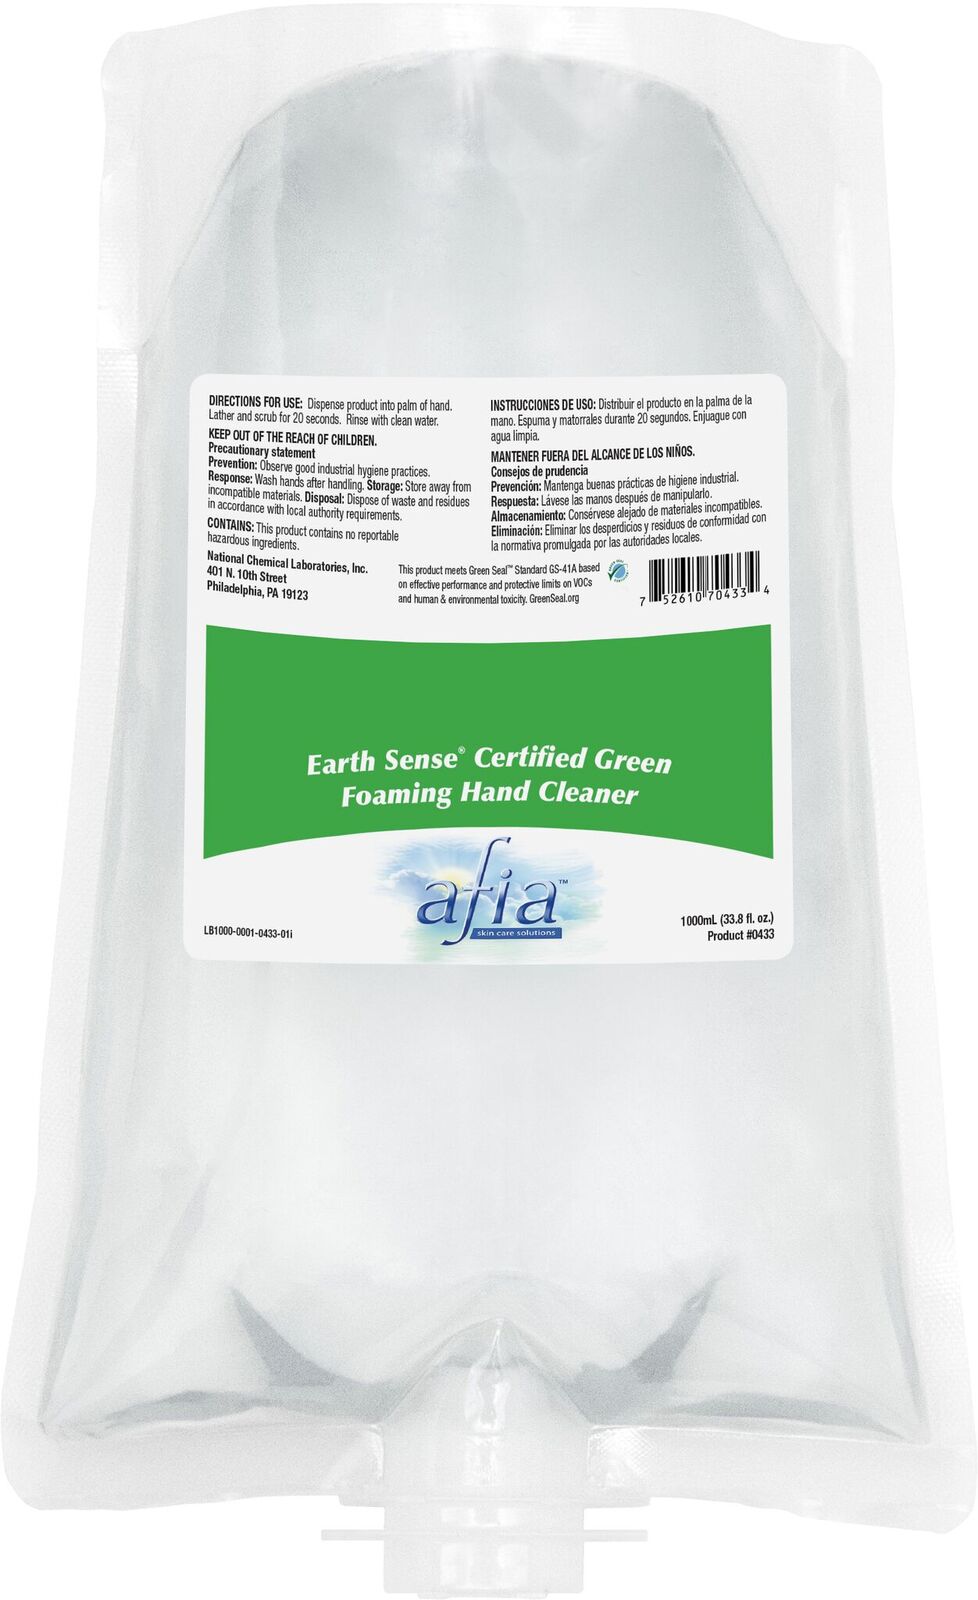 NCL afia Earth Sense Certified Green Foaming Hand